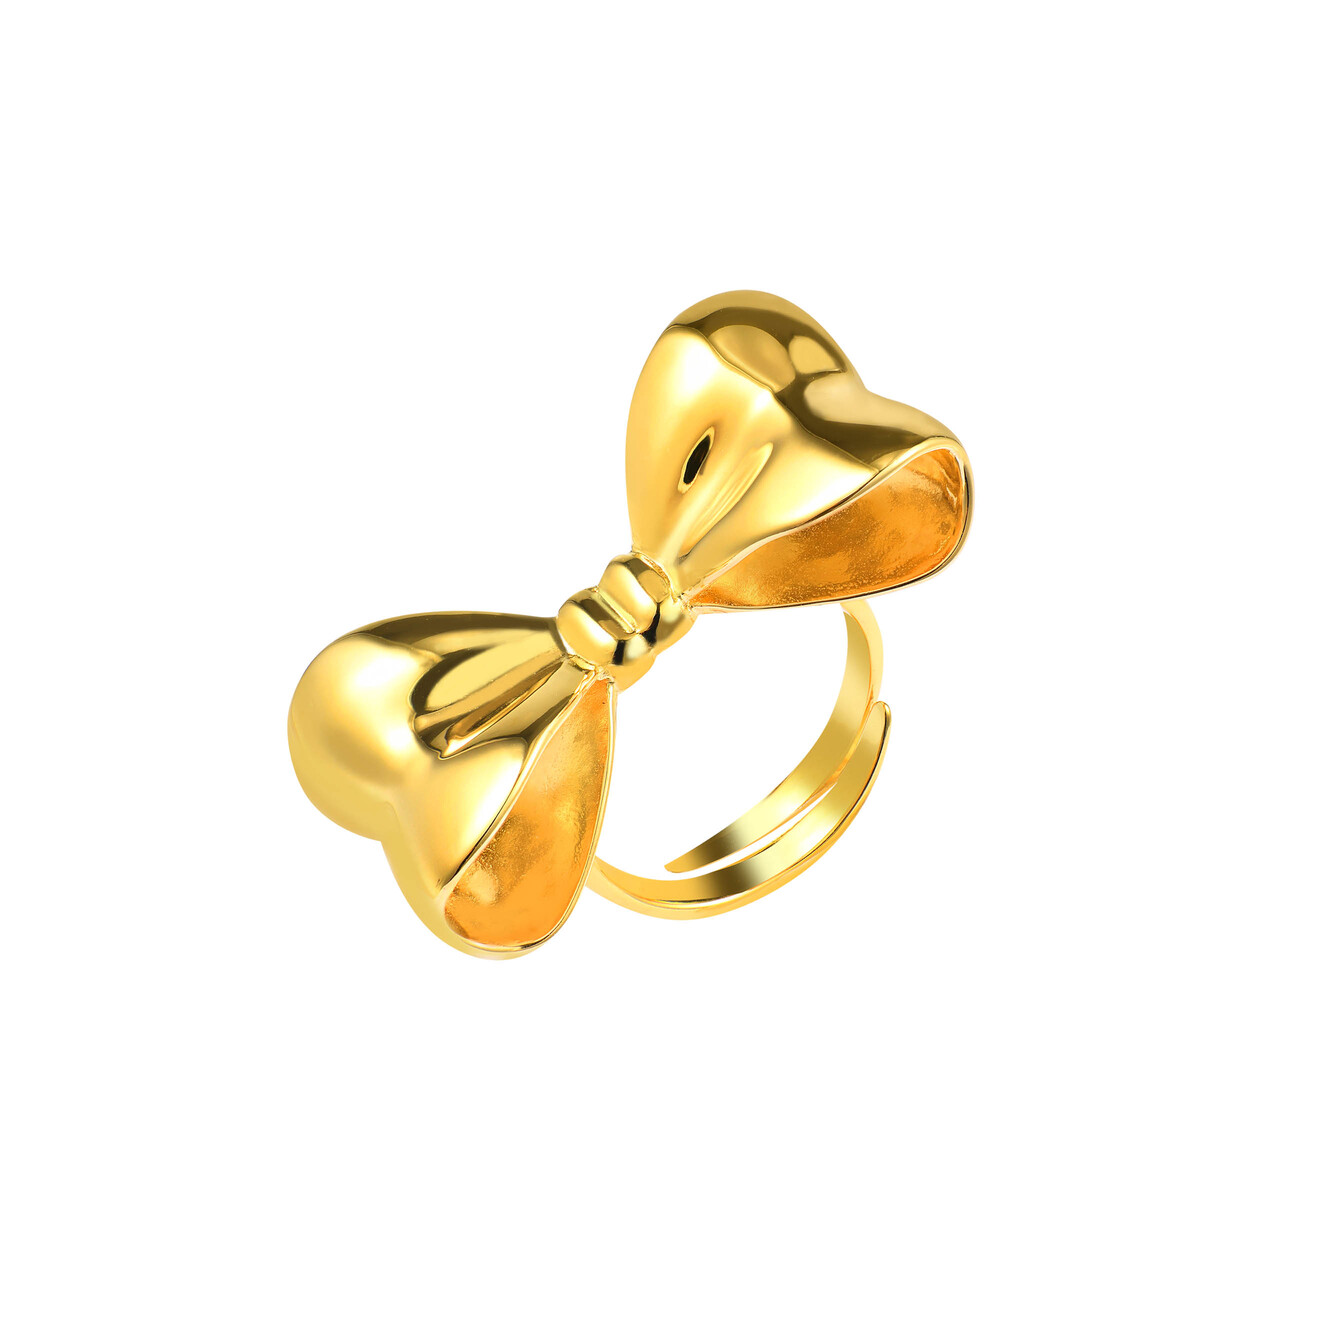 WANNA?BE! Золотистое кольцо-бант из серебра issue 2 золотистое кольцо in bloom из гематита